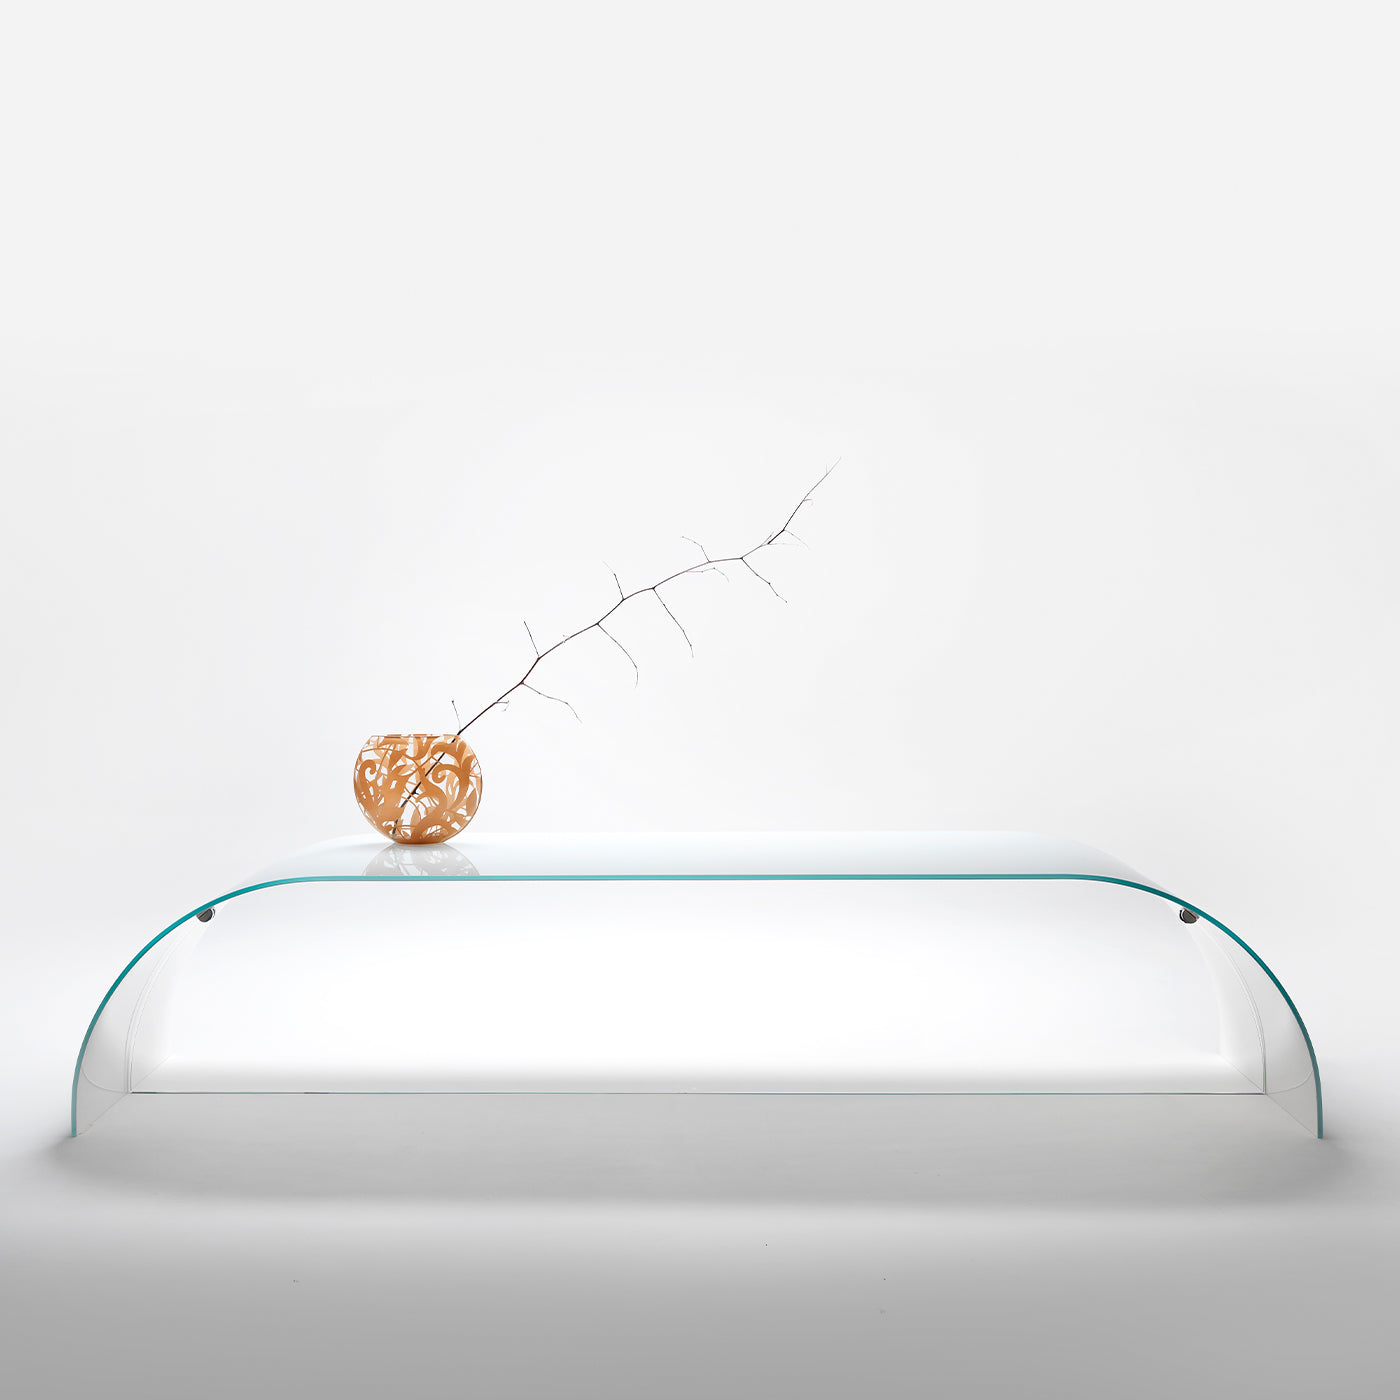 Nastro White Glass Table by Daniele Merini - Alternative view 3